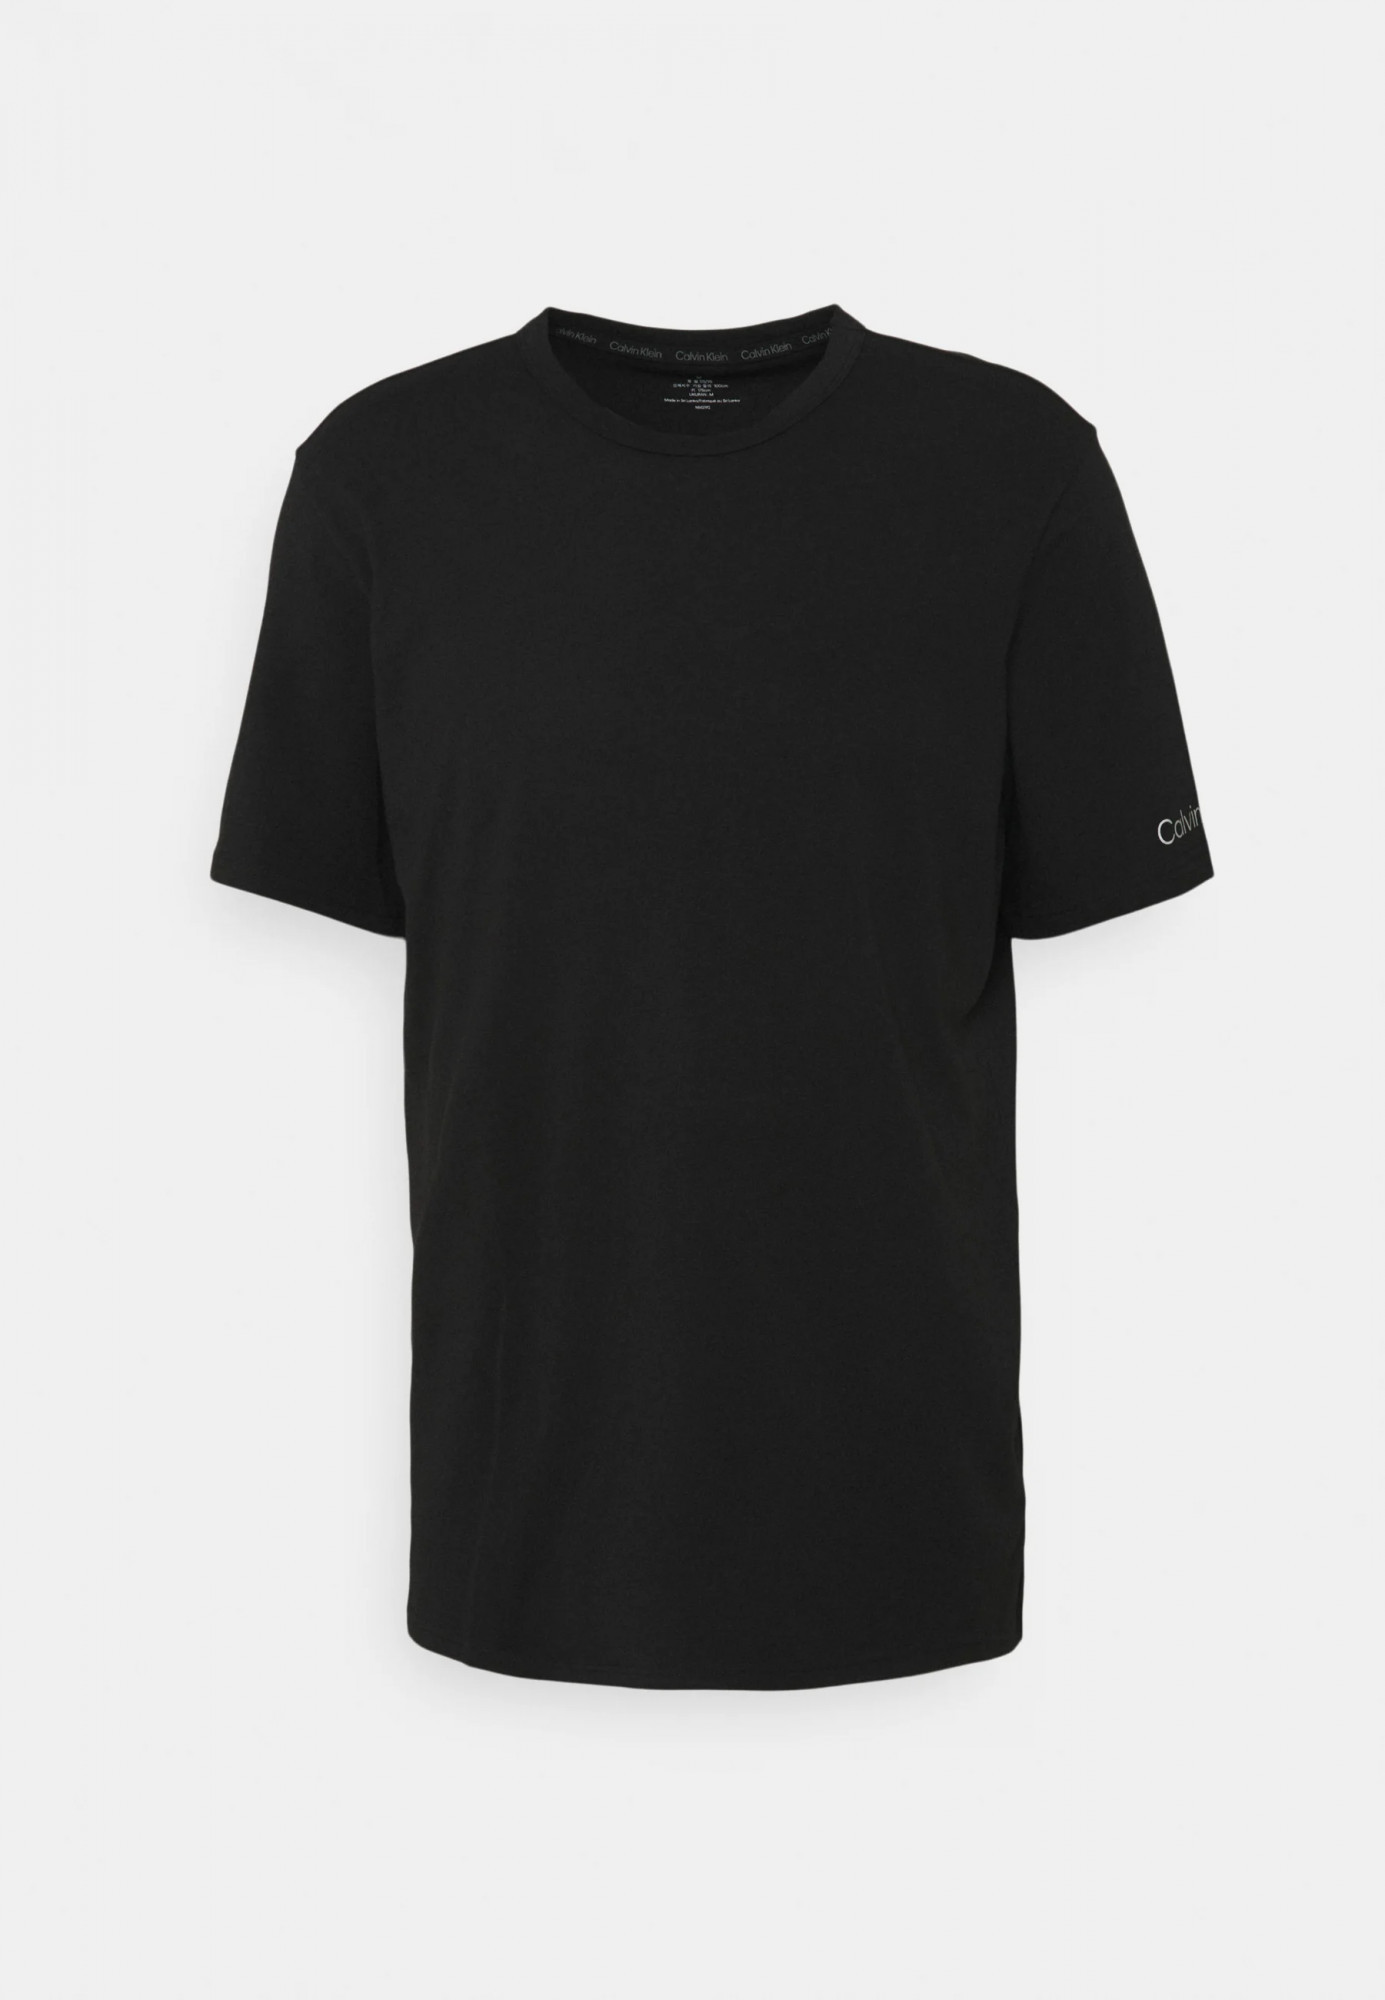 Pánské tričko UB1 černá černá L model 15825462 - Calvin Klein